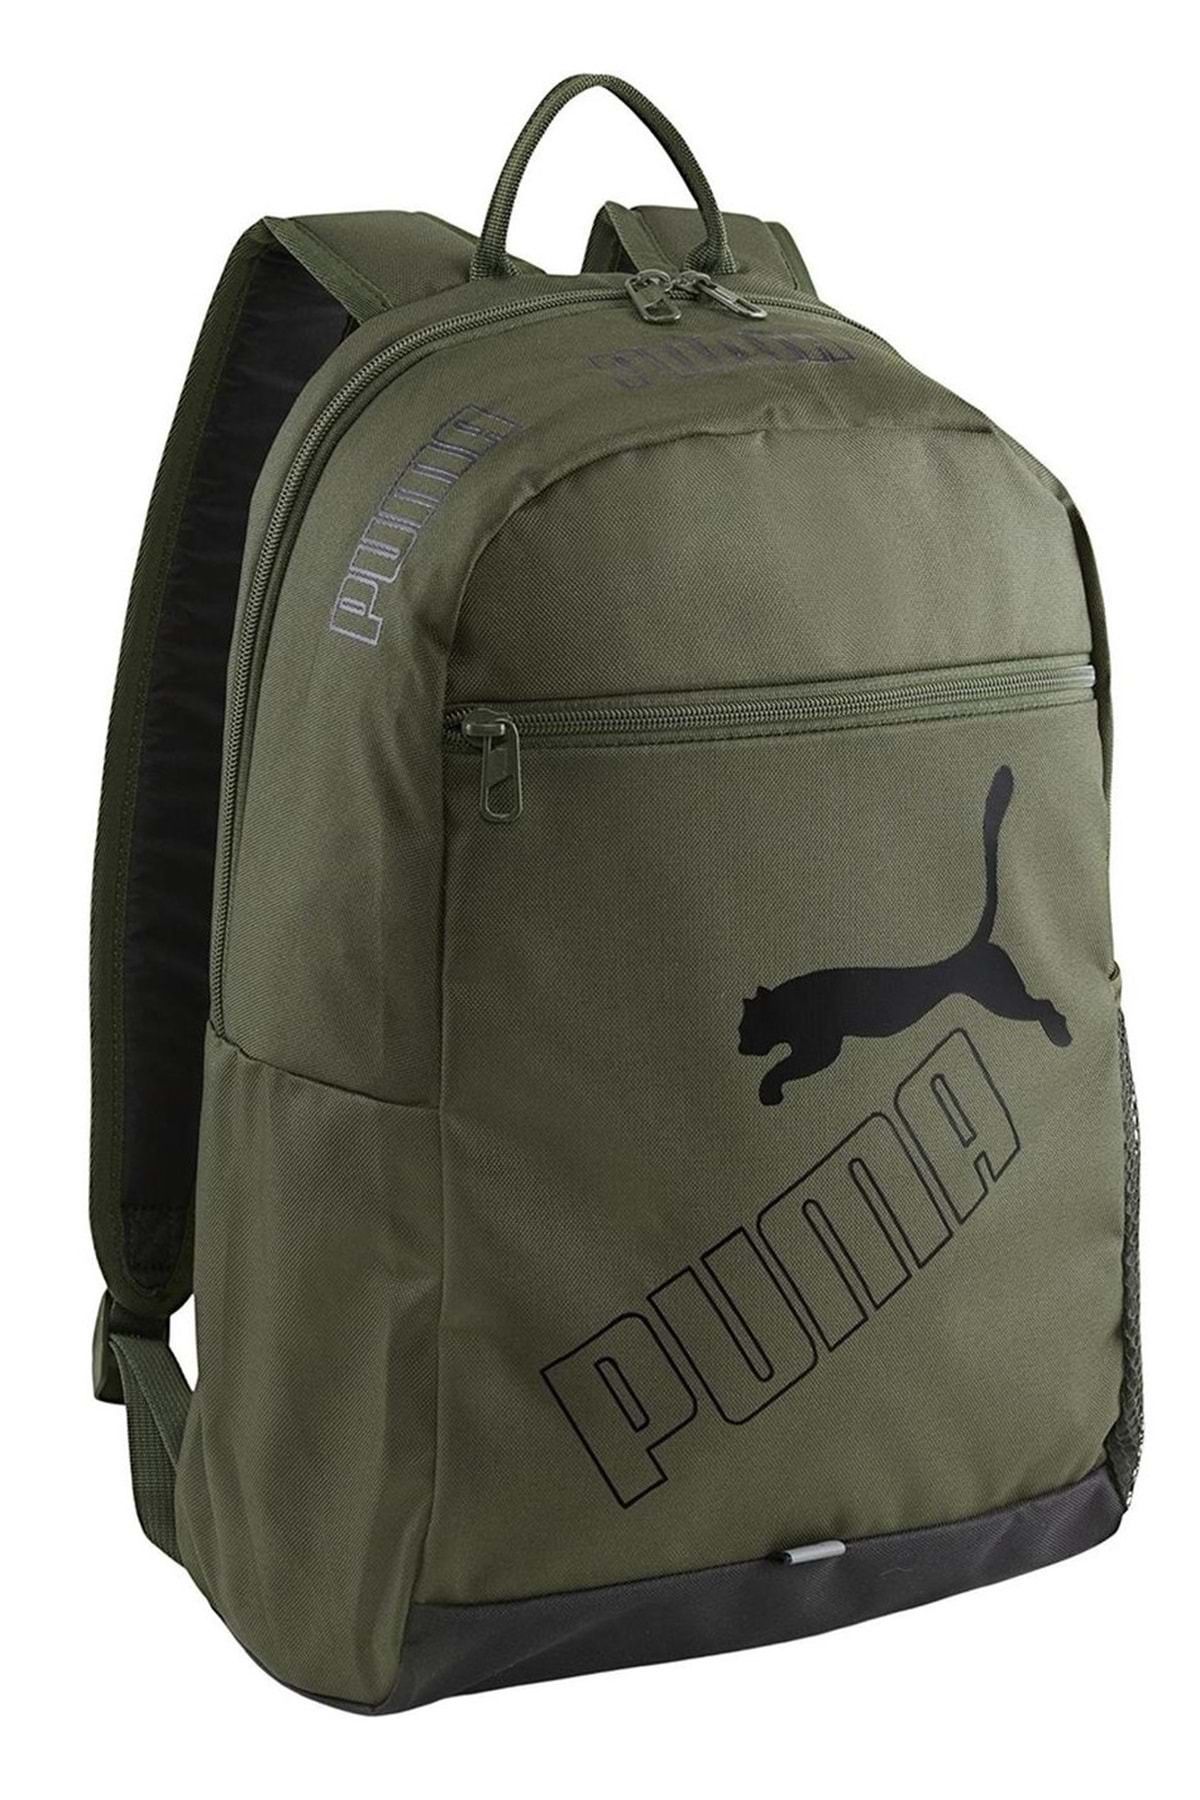 Puma Phase Backpack Iı 0772295-01 Unisex Sırt Çantası Haki